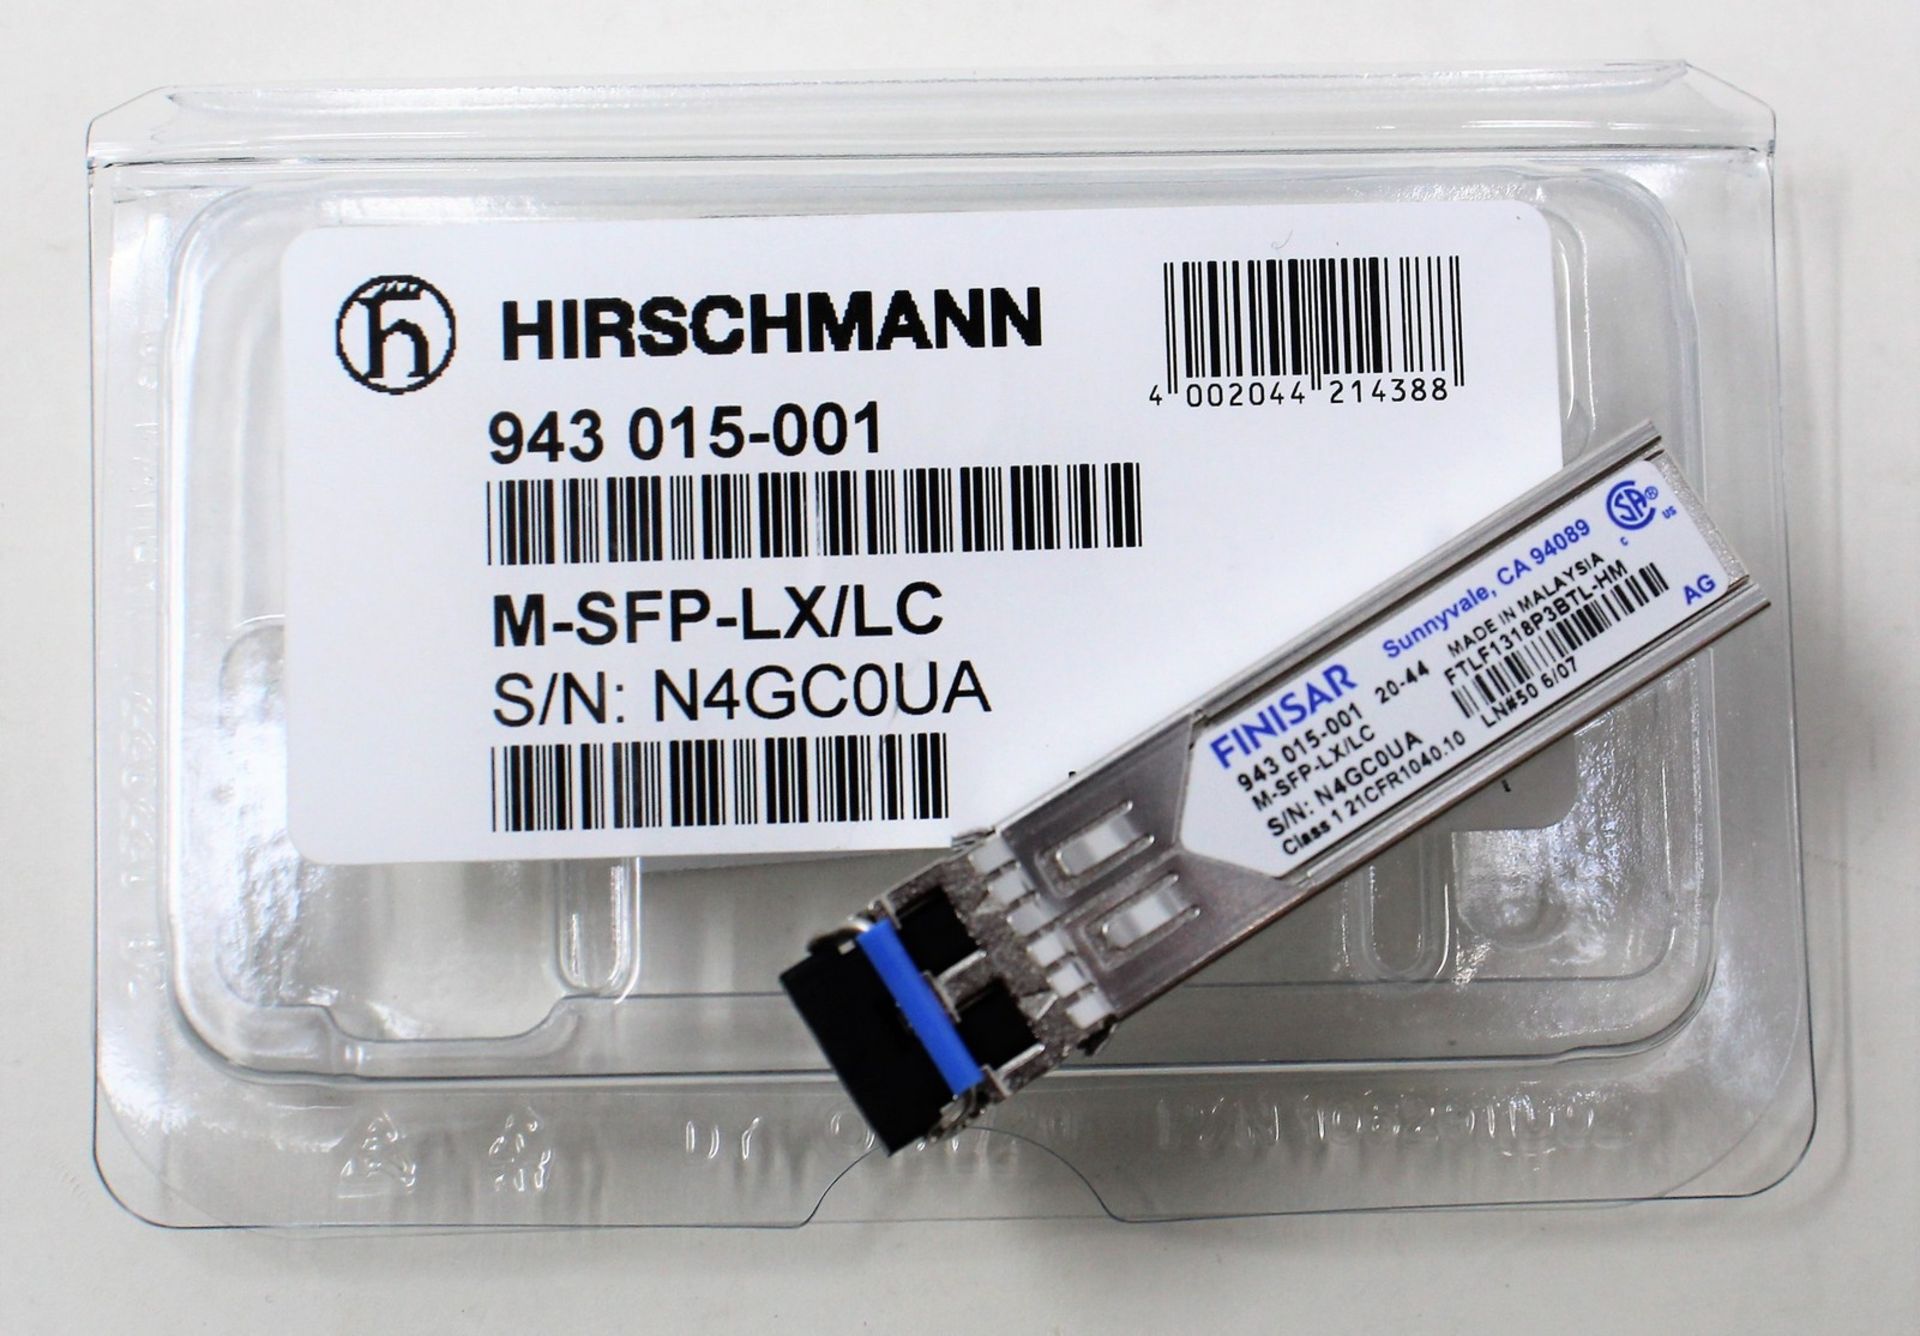 An as new Hirschmann Finisar 943 015-001 M-SFP-LX/LC SFP Fibreoptic Gigabit-Ethernet Transceiver